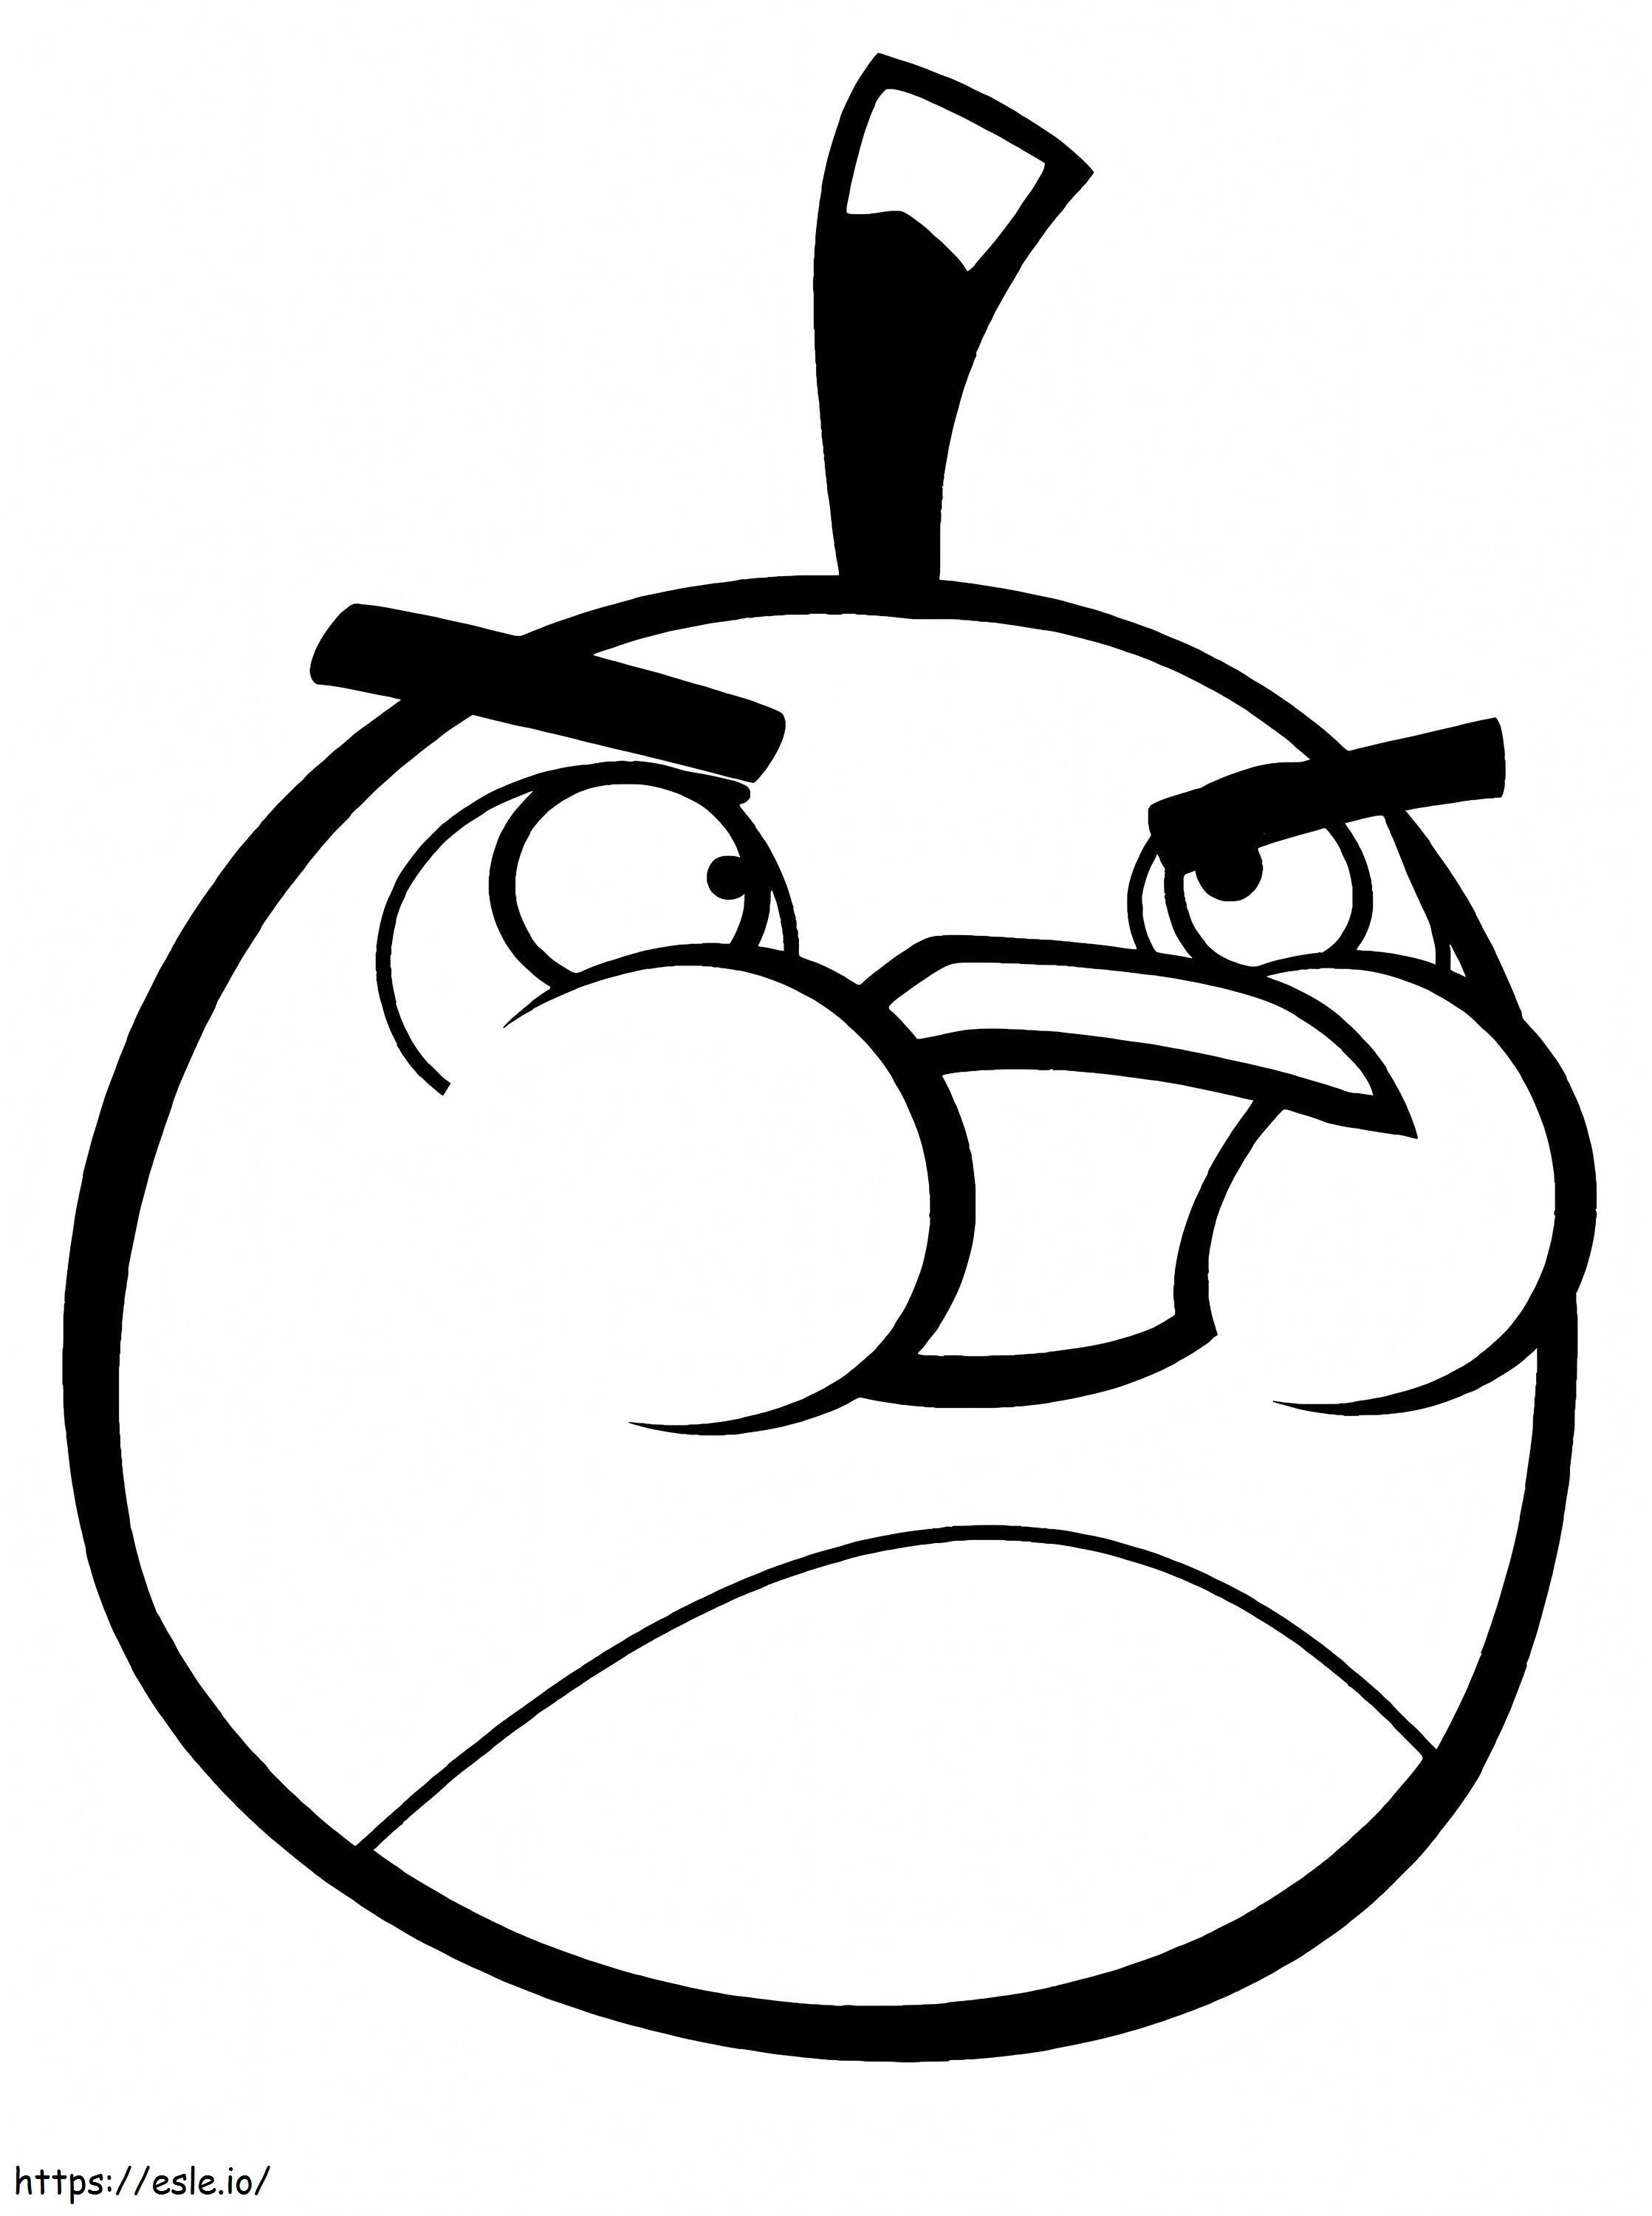 1554109371 Oyun Boyama Angry Bird Bombayı Kurtar The Black Bird Of Game Boyama Angry Bird boyama